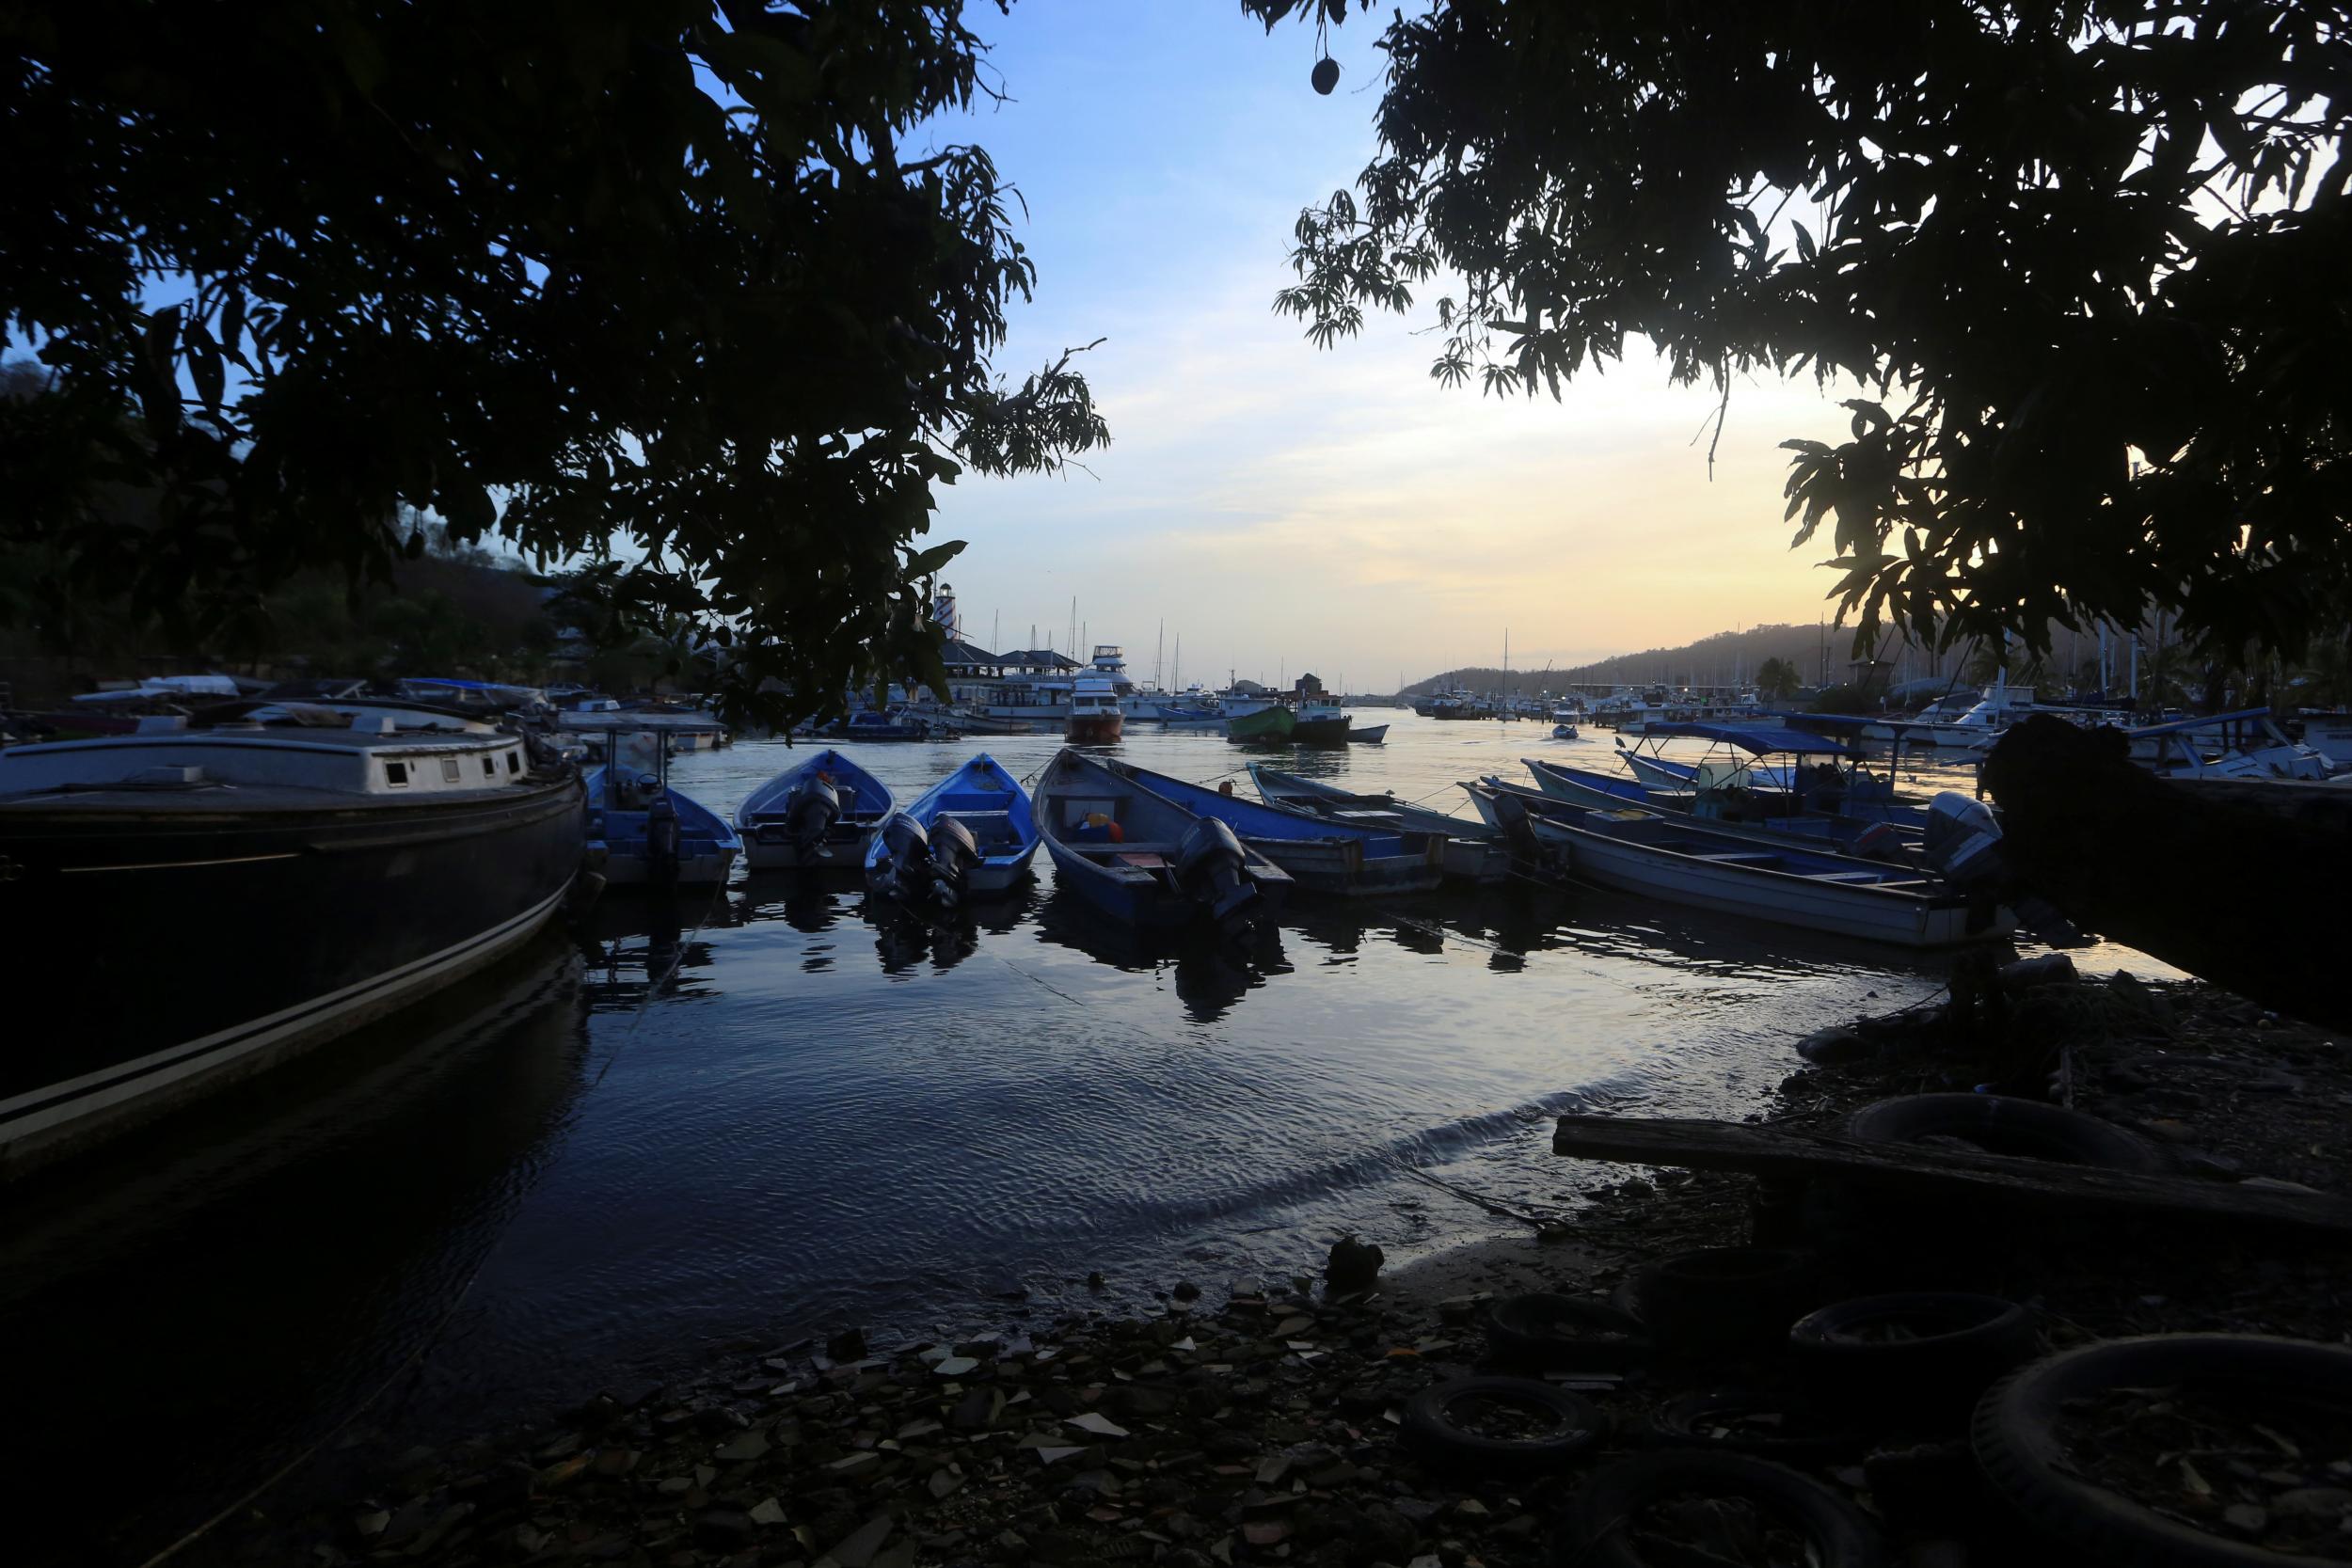 Boats are docked at Alcan Bay, in Chaguaramas, Trinidad and Tobago (Reuters)